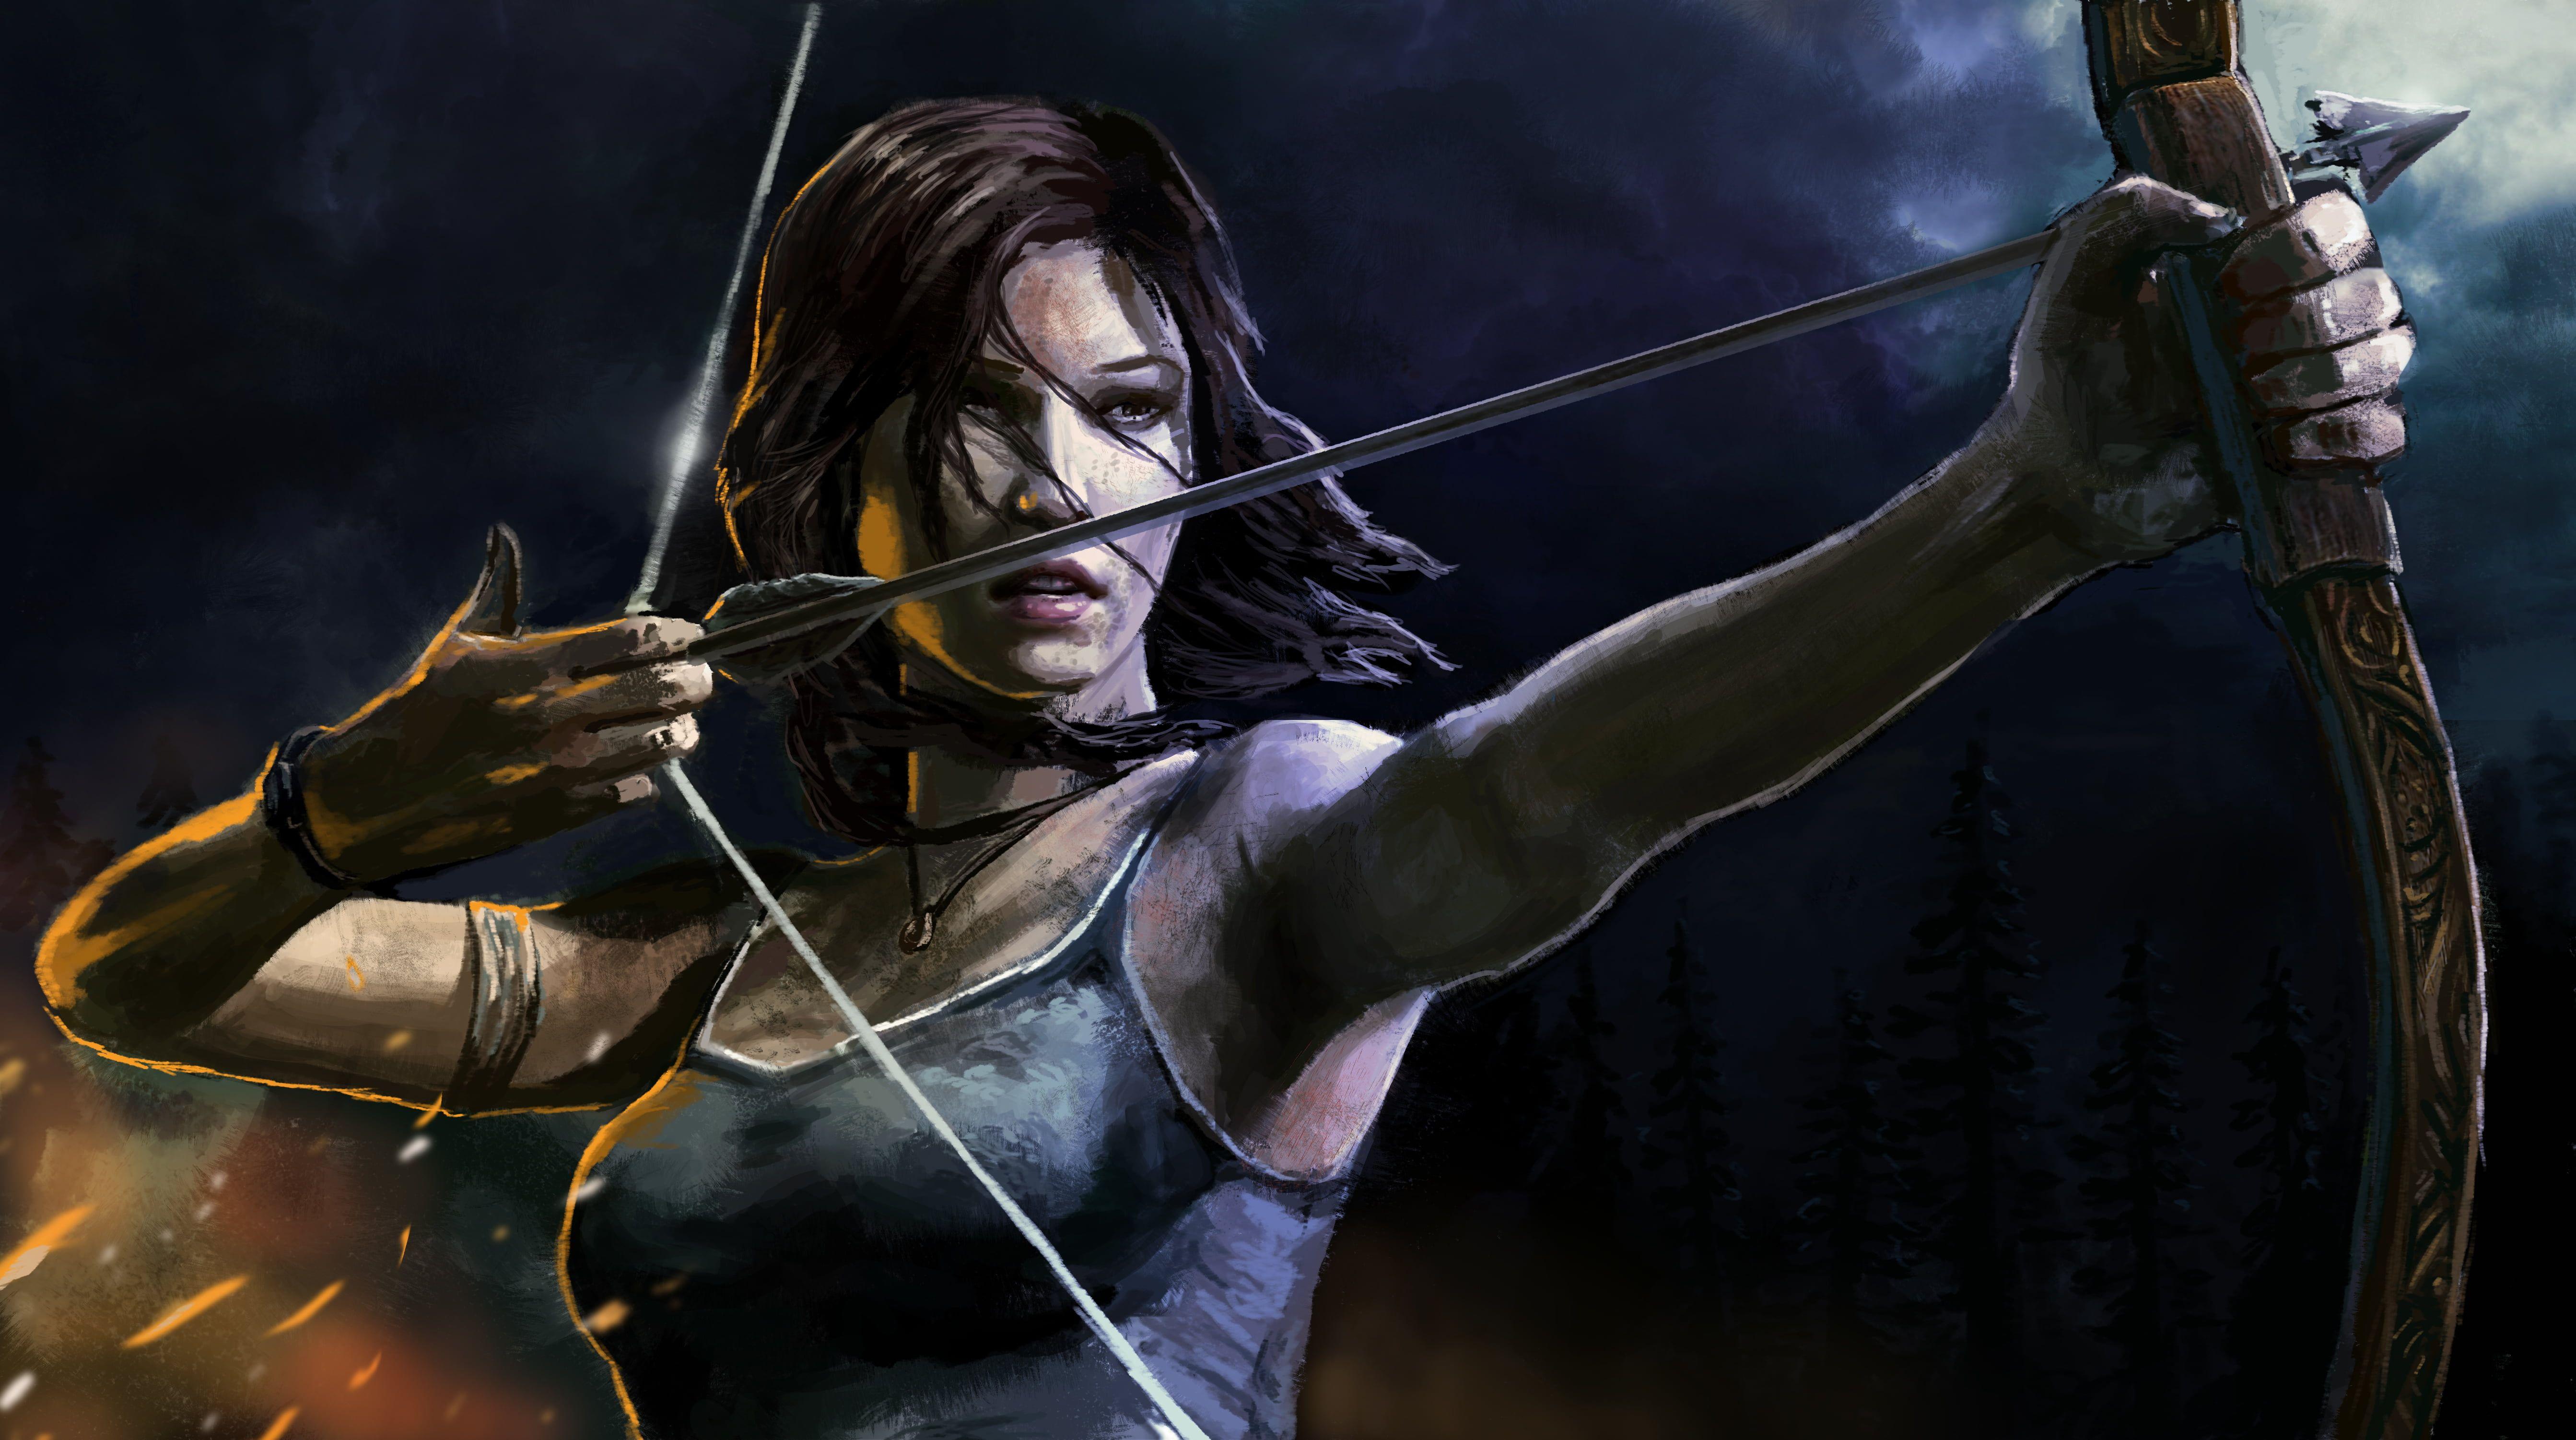 Lara Croft painting HD wallpaper